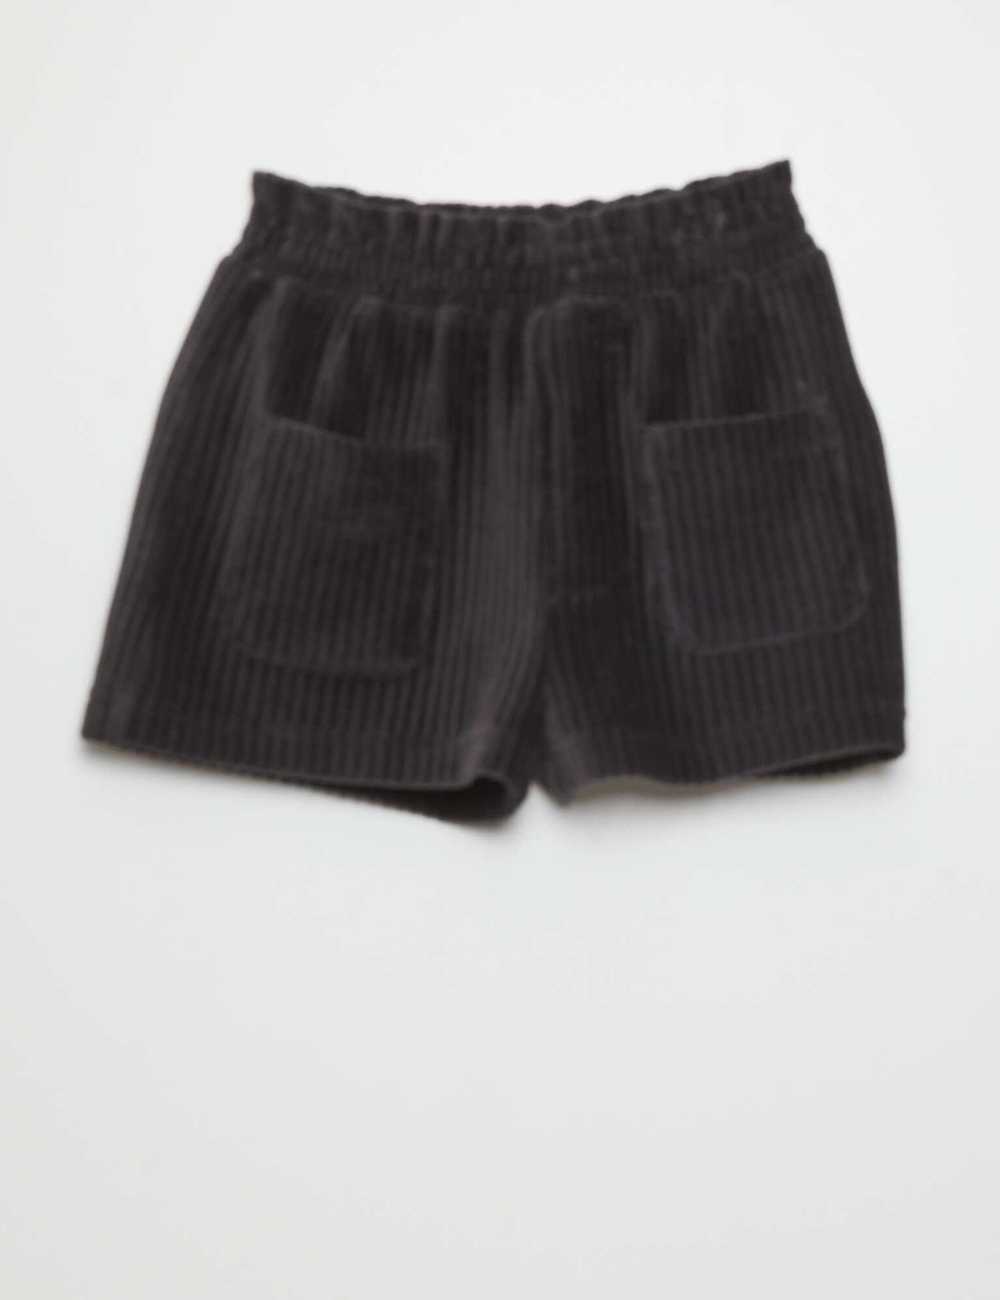 Buy Corduroy Shorts Online